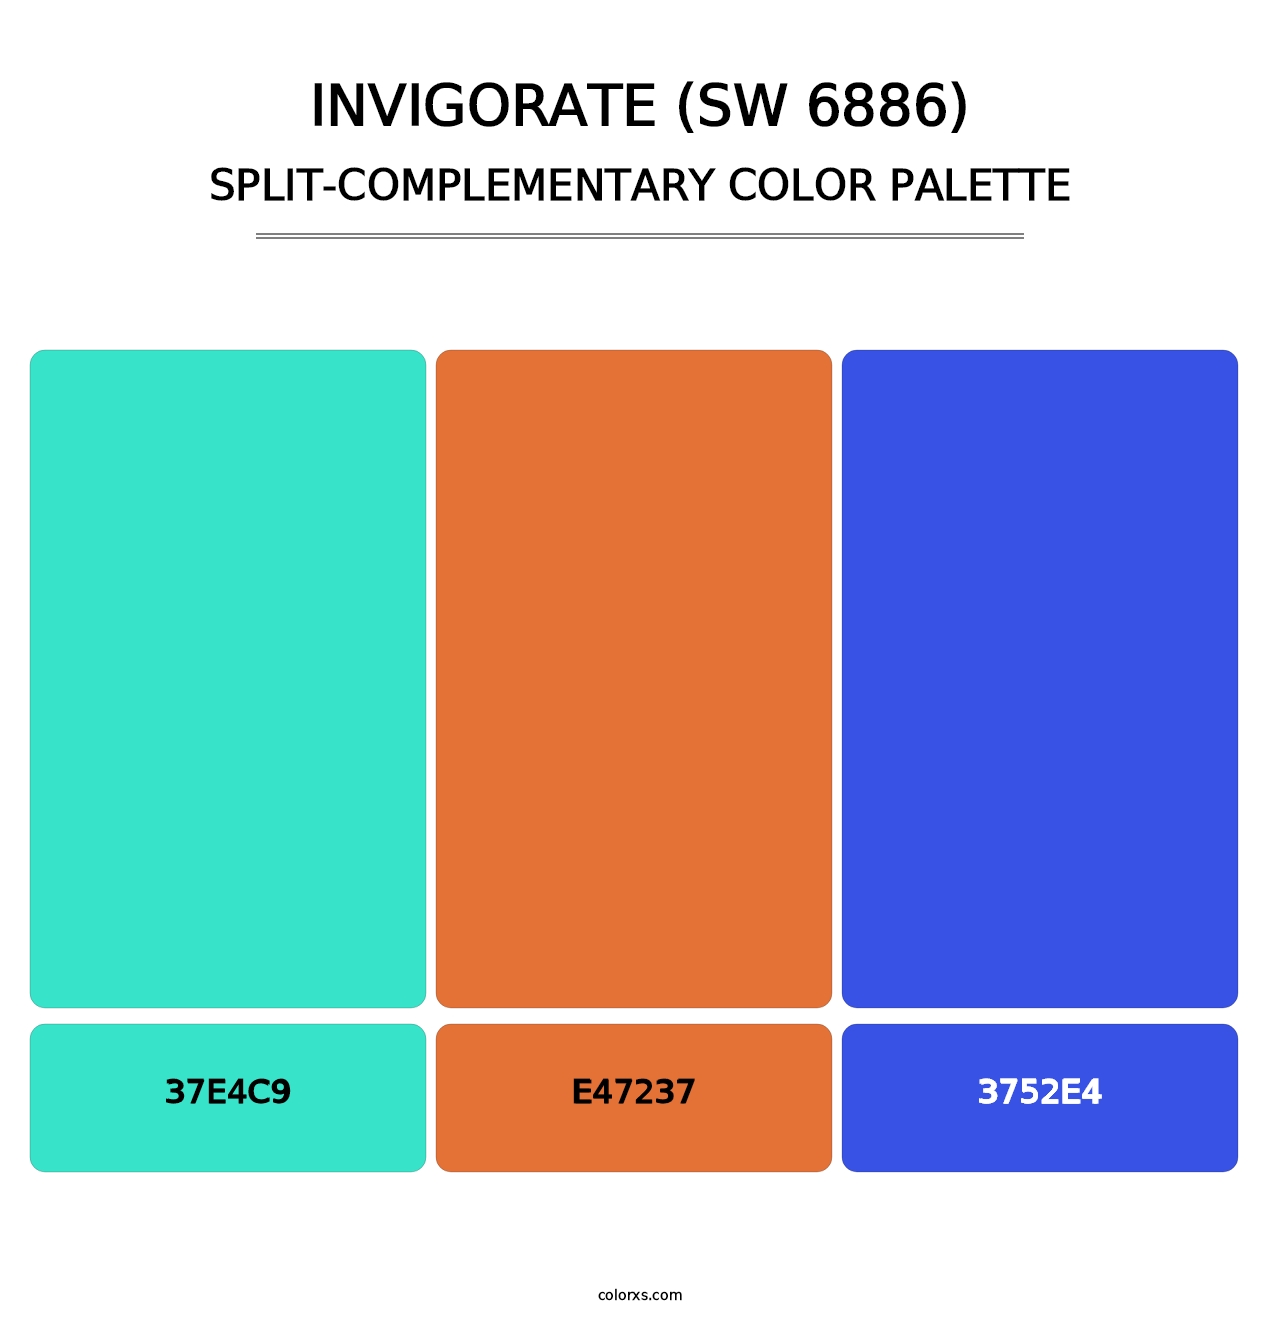 Invigorate (SW 6886) - Split-Complementary Color Palette